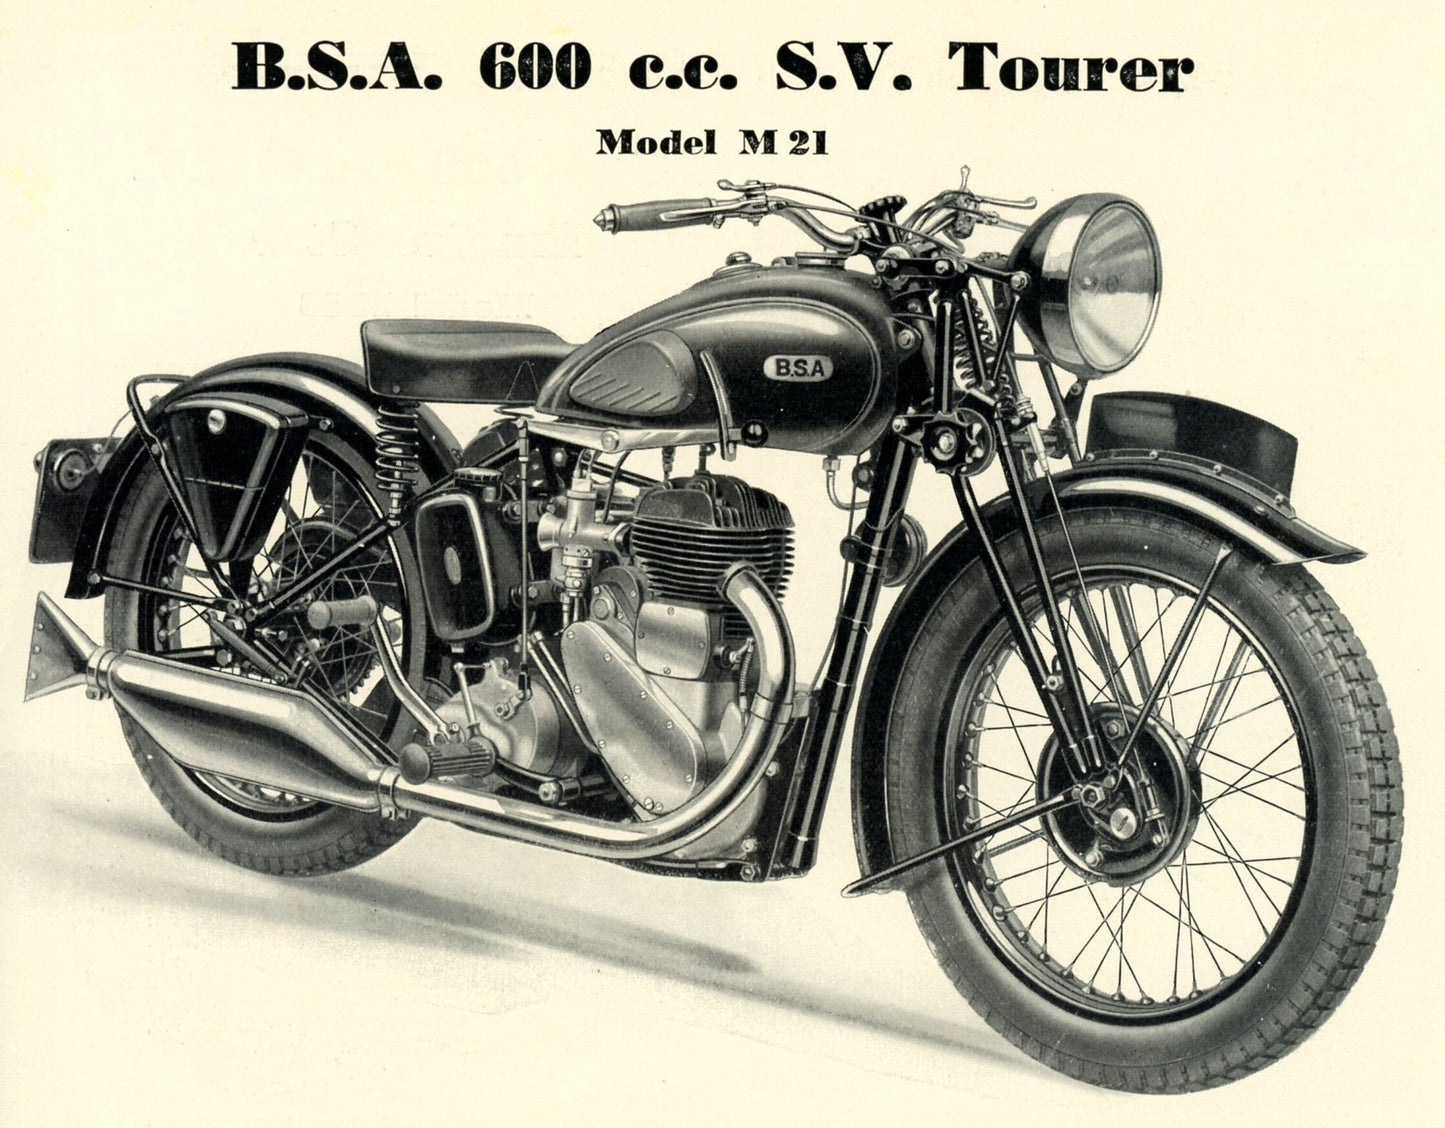 1937 BSA motorcycle  advertisement poster  (2621 )